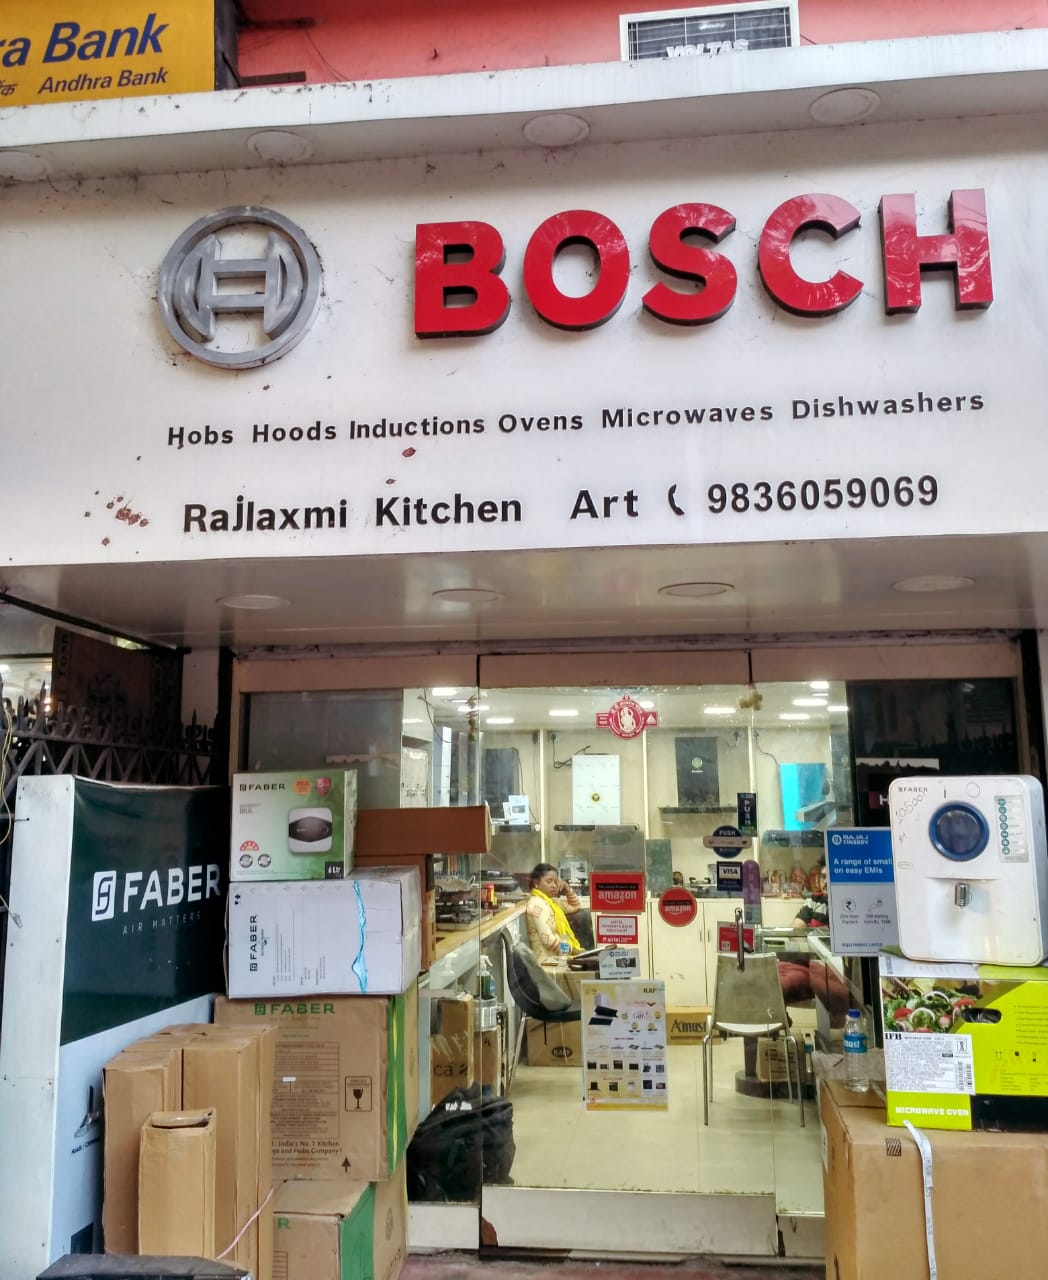 Rajlaxmi Kitchen Art - Bosch,Hindware,Faber kitchen chimney service centre Mukundapur,santoshpur,garia,south kolkata